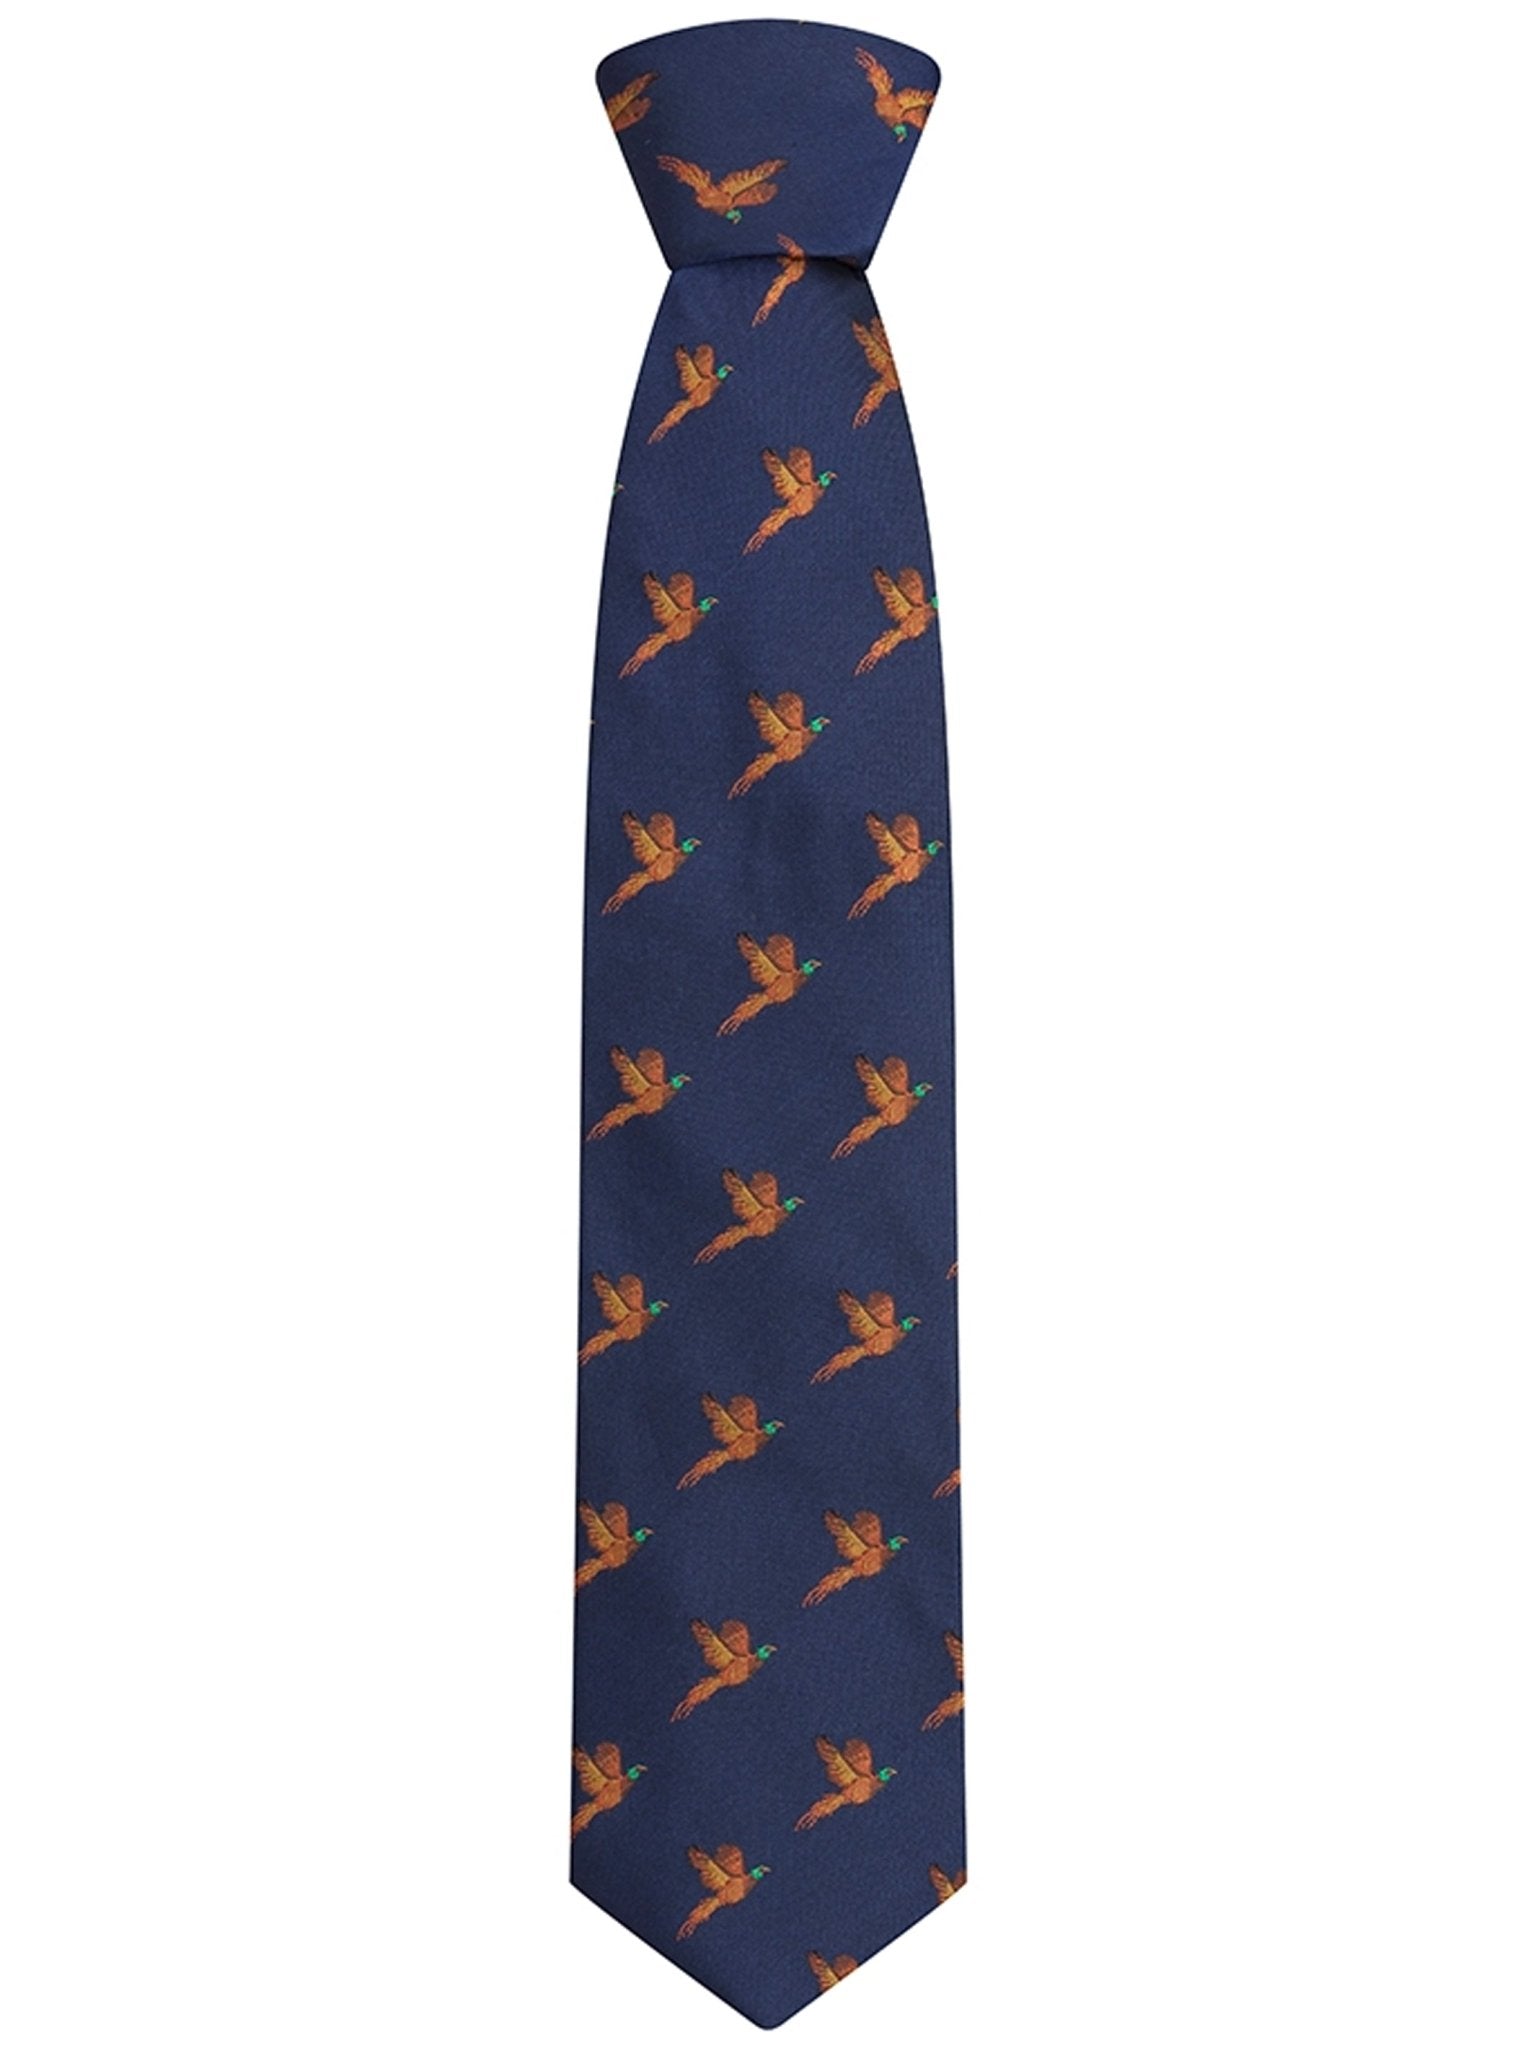 4elementsclothingHoggs of FifeHoggs of Fife - Premium 100% Silk Woven Neck Tie - Pheasant print (Boxed)AccessoriesSTIE/NV/1